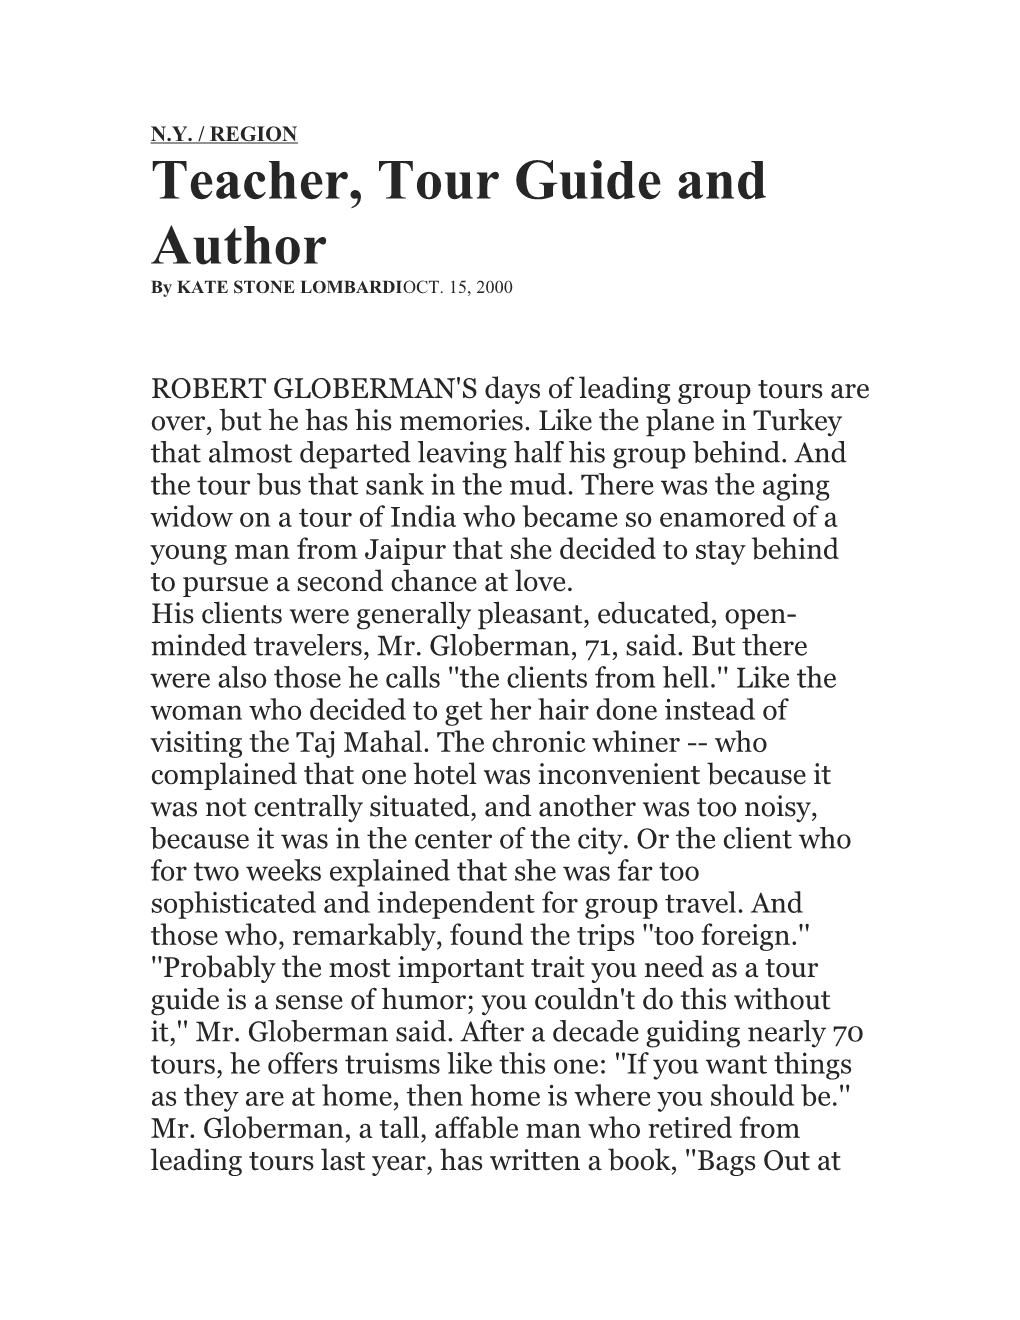 Teacher, Tour Guide and Author